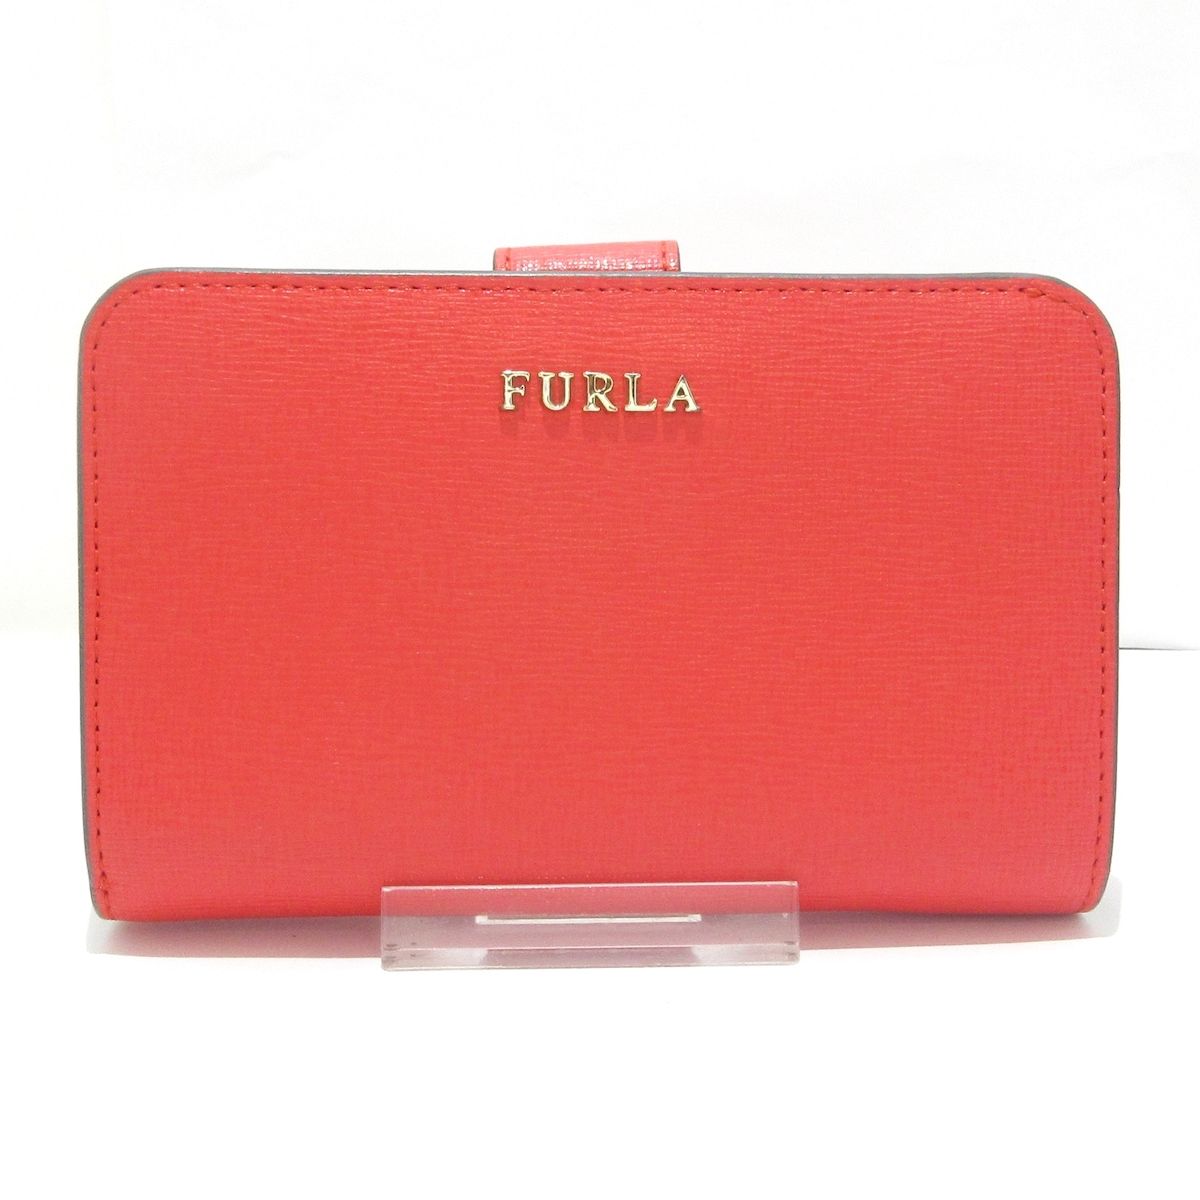 FURLA(フルラ) 2つ折り財布美品 レッド L字ファスナー レザー - メルカリ